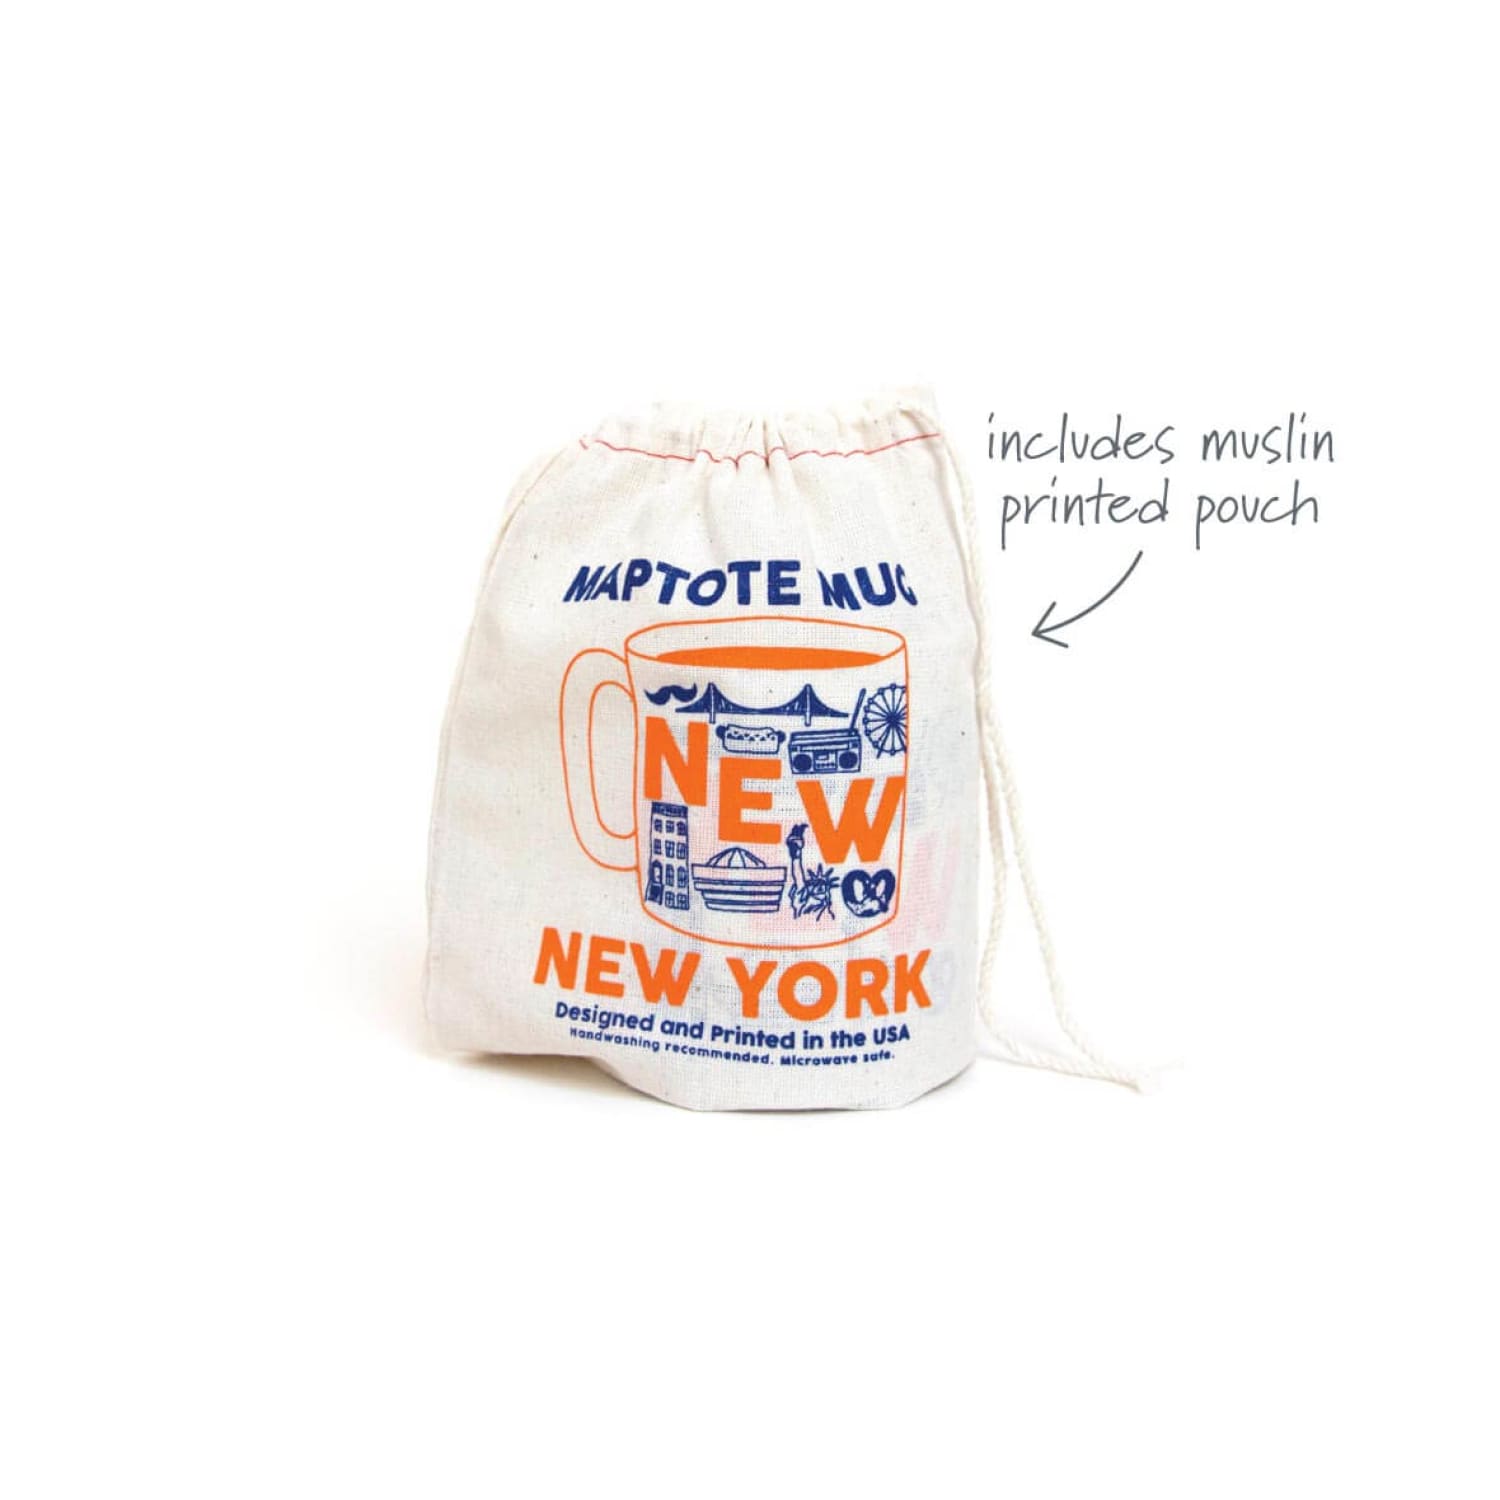 New York City Mug Nycstories - Wendybuild